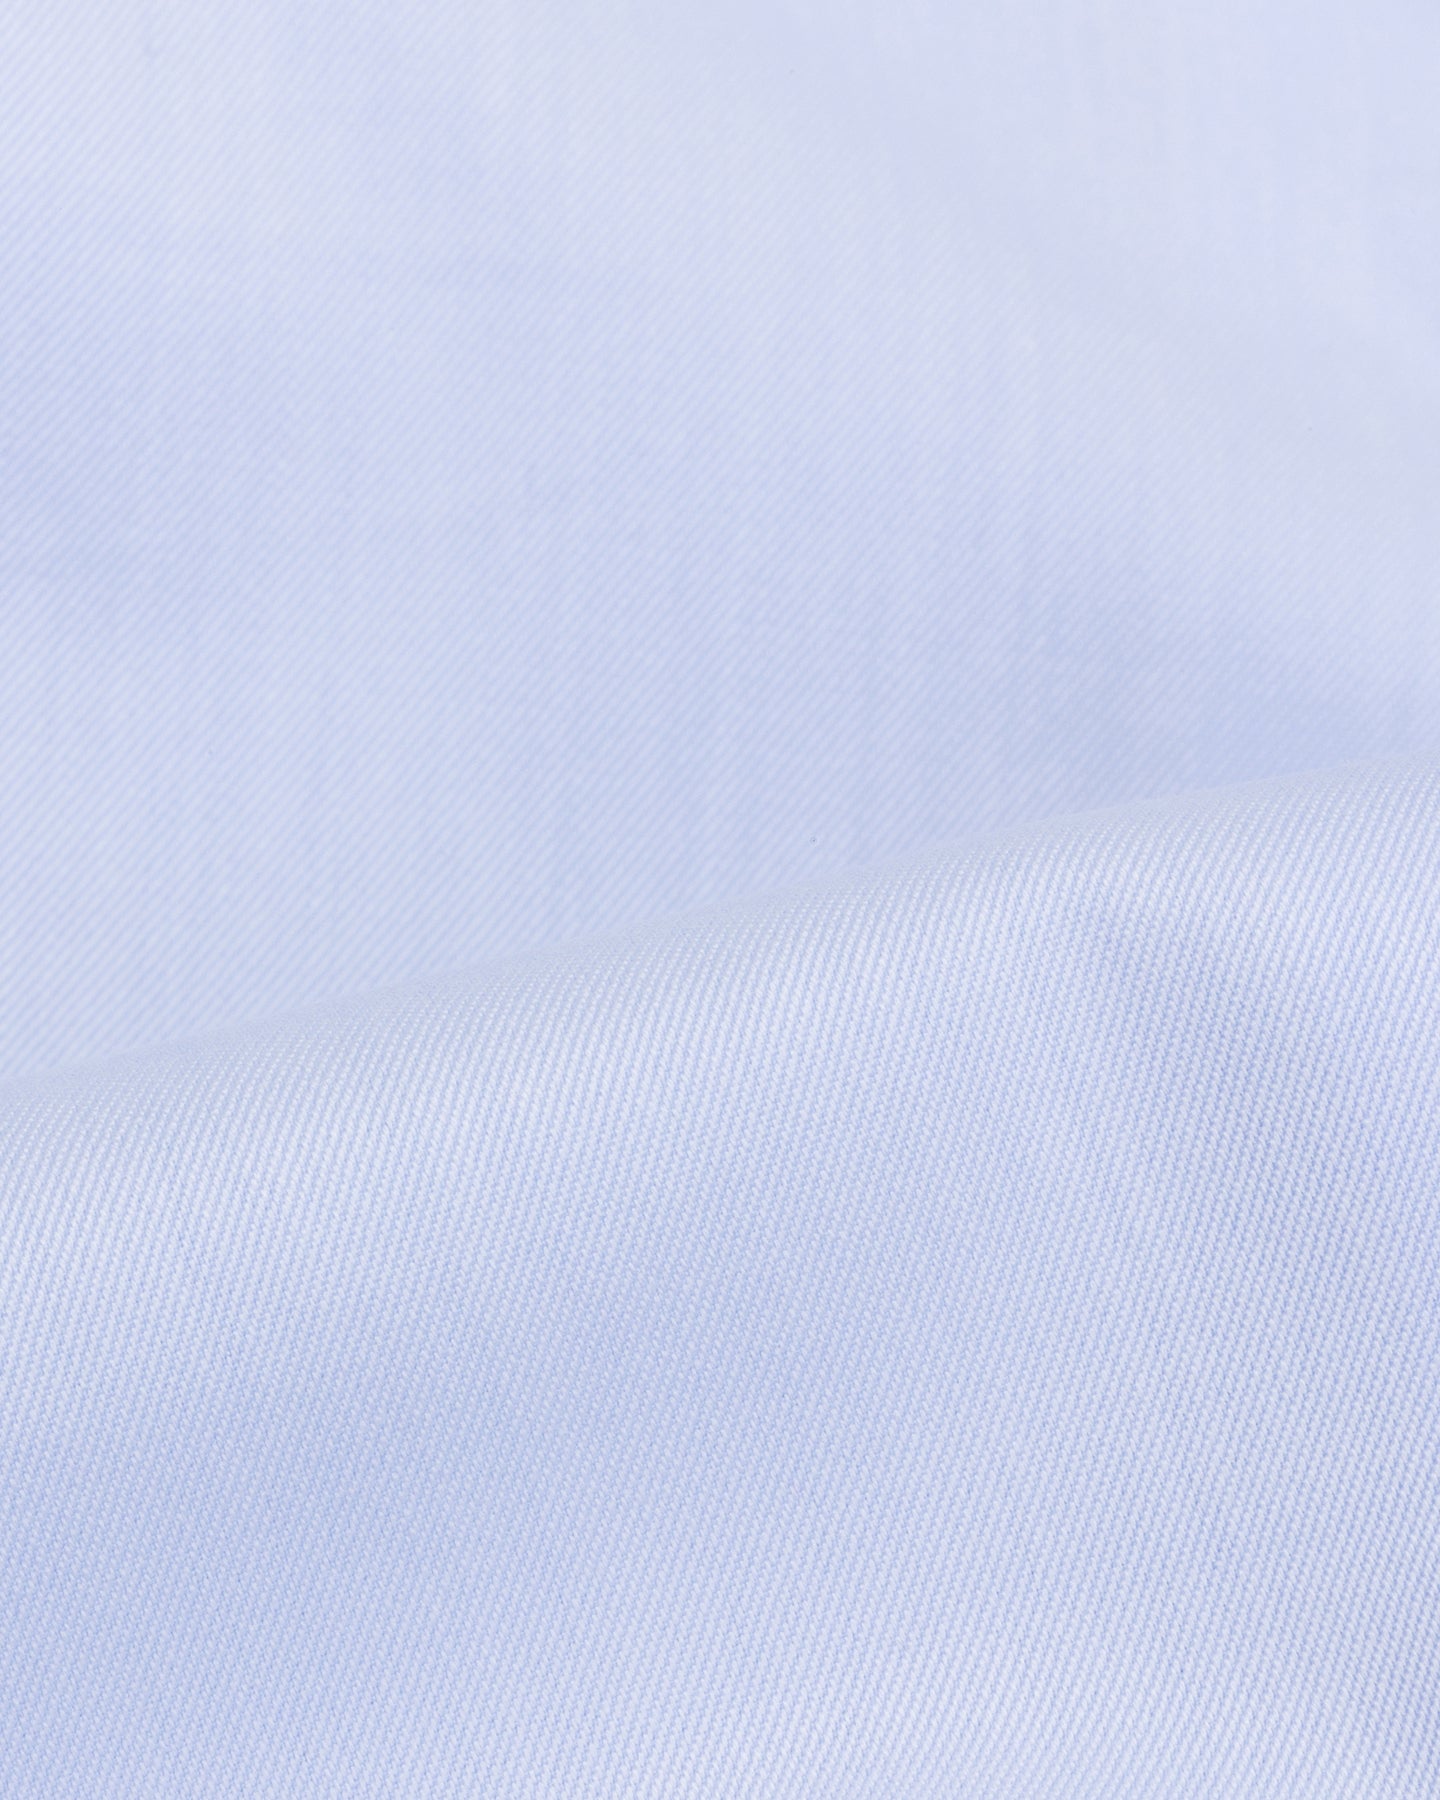 A light blue twill shirt fabric